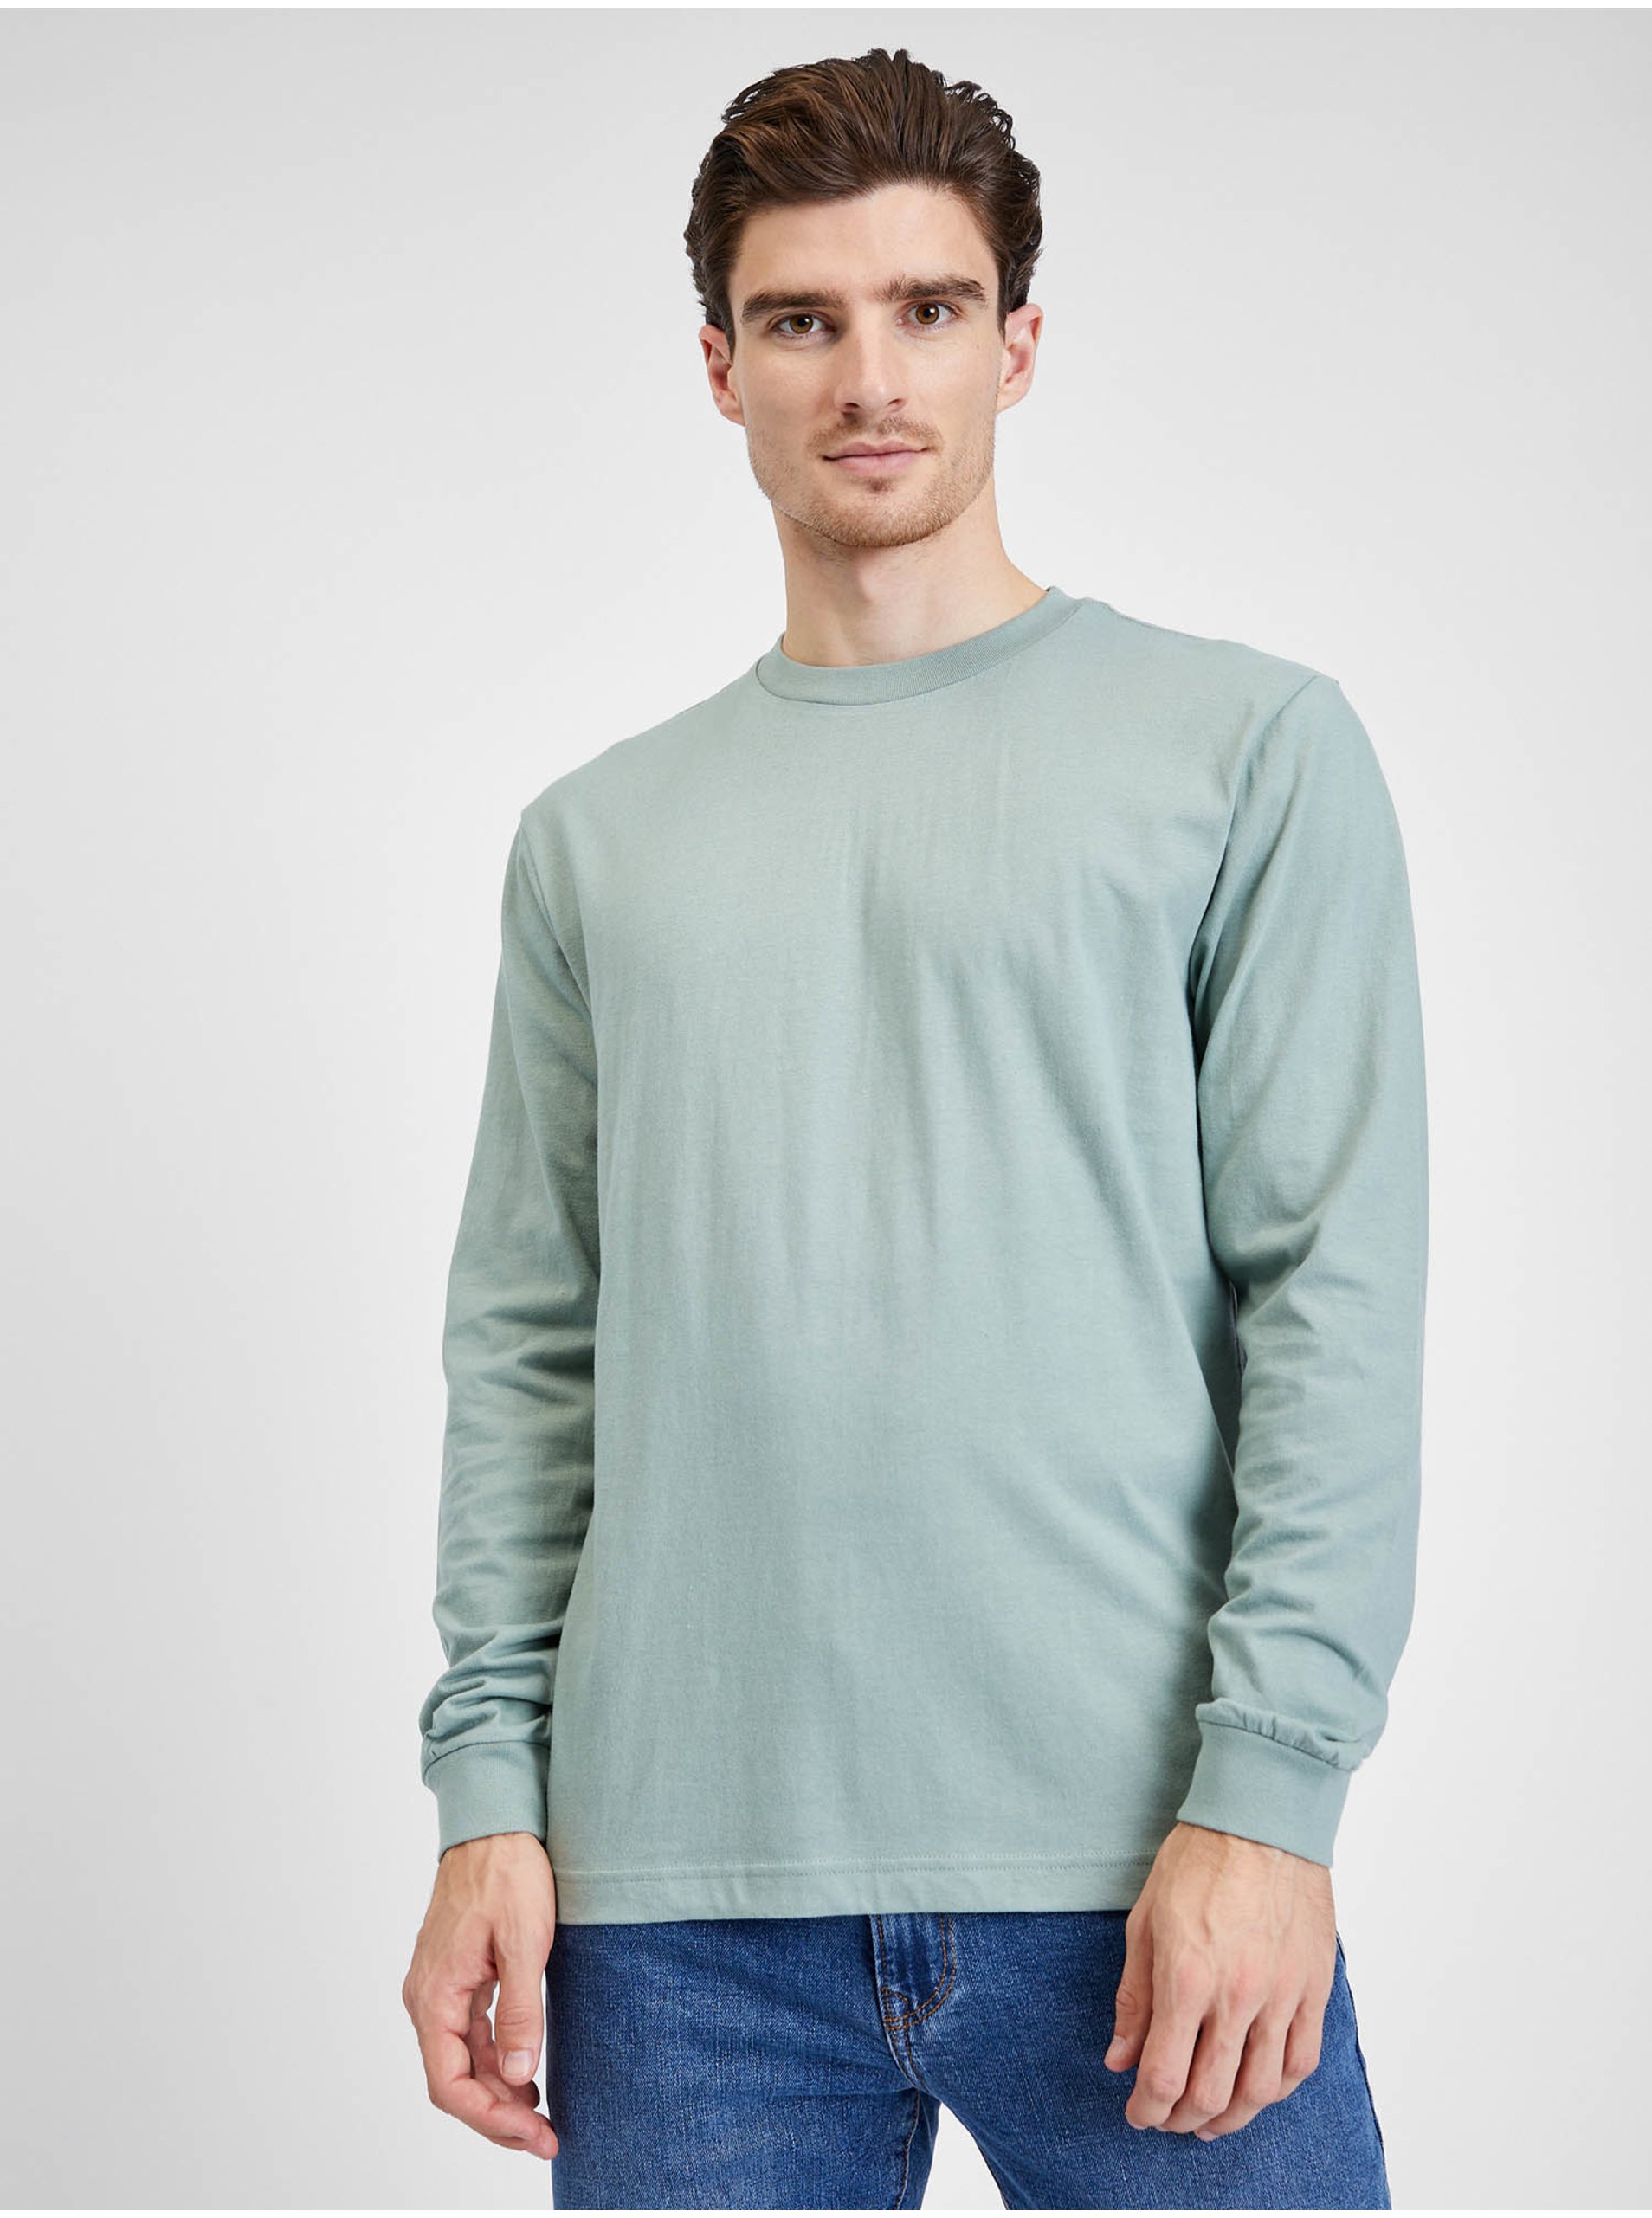 Lacno Modré pánské tričko z organické bavlny GAP